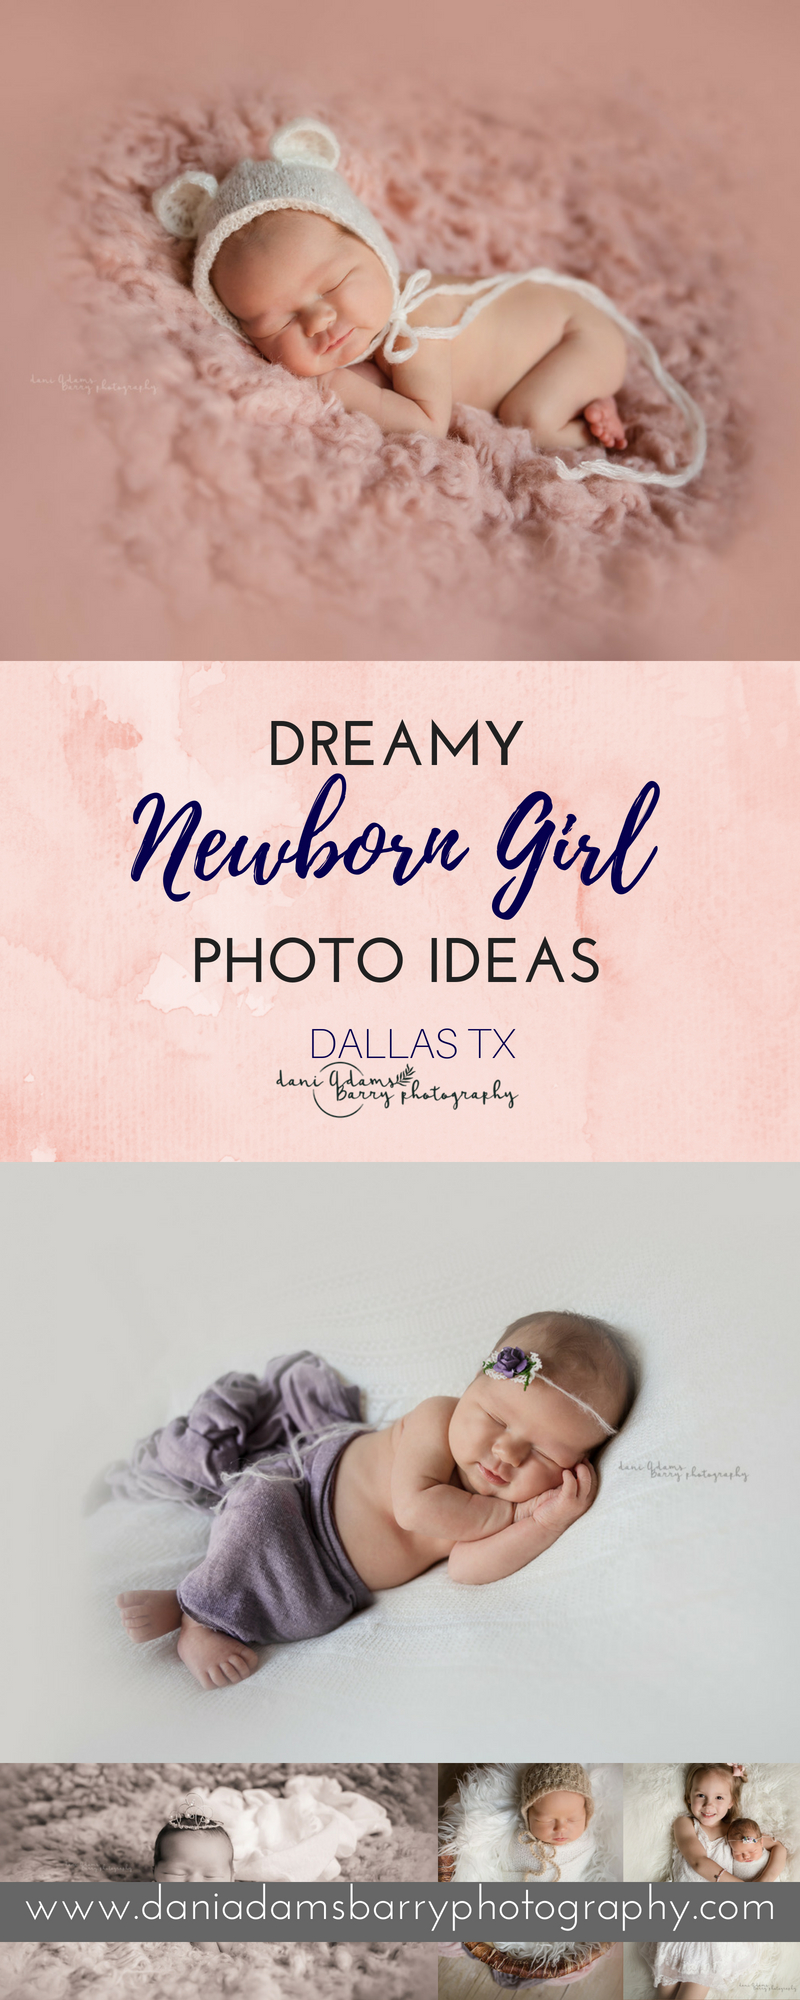 Baby girl Newborn Photo ideas - Girl Newborn Photography Dallas TX - Dani Adams Barry Photography